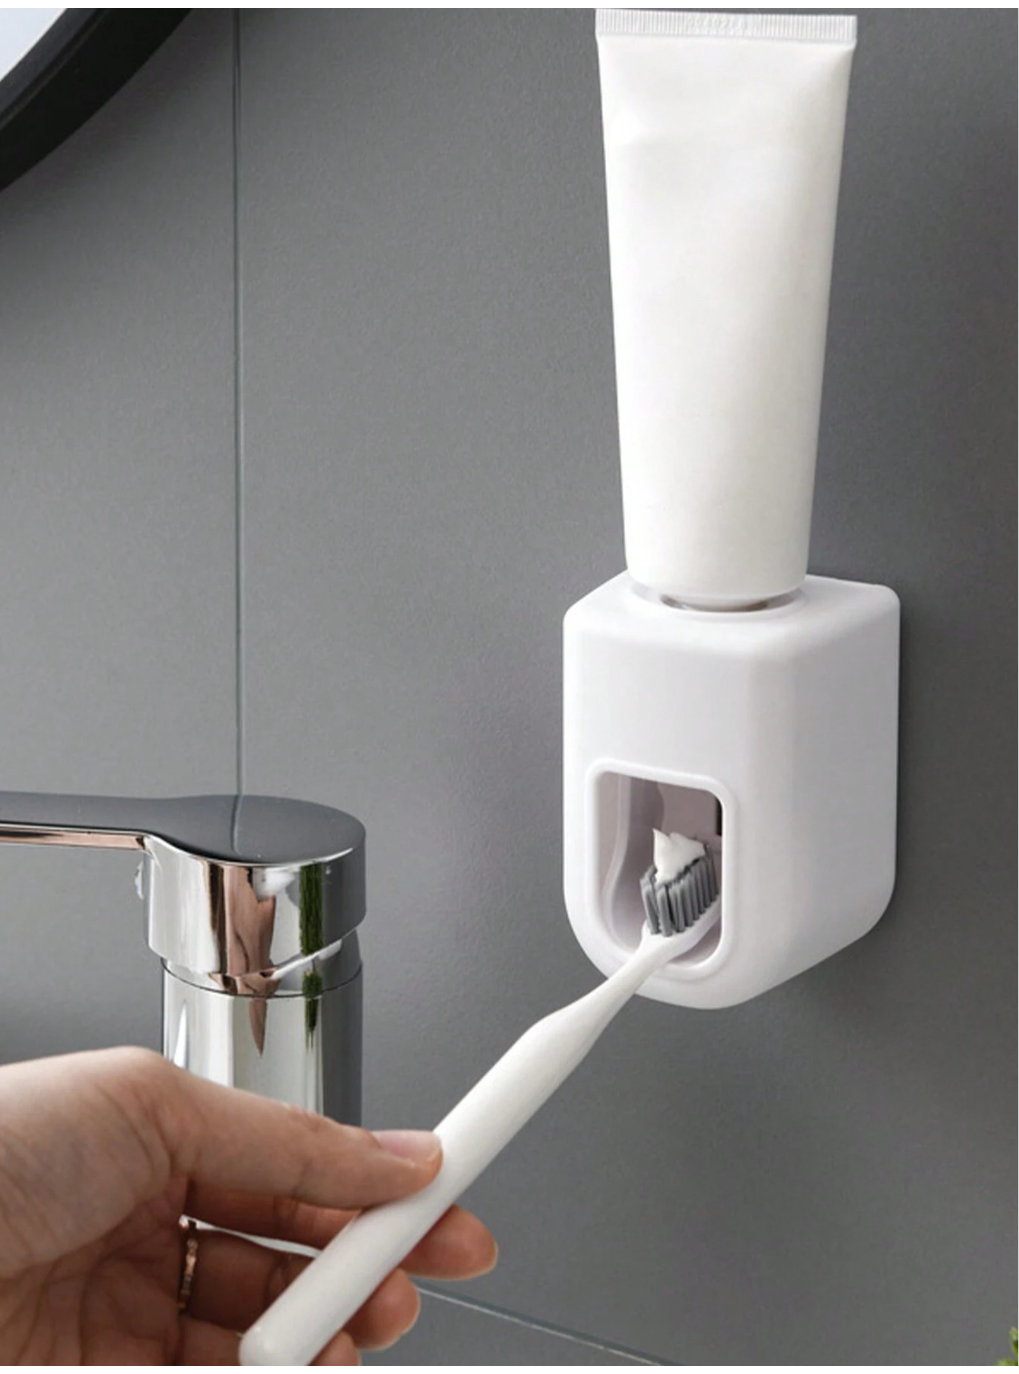 Effortless Elegance: Nordic Wall Mounted Automatic Toothpaste Dispenser – Drill-Free, Quantitative Extrusion, Minimalist Bathroom Design!